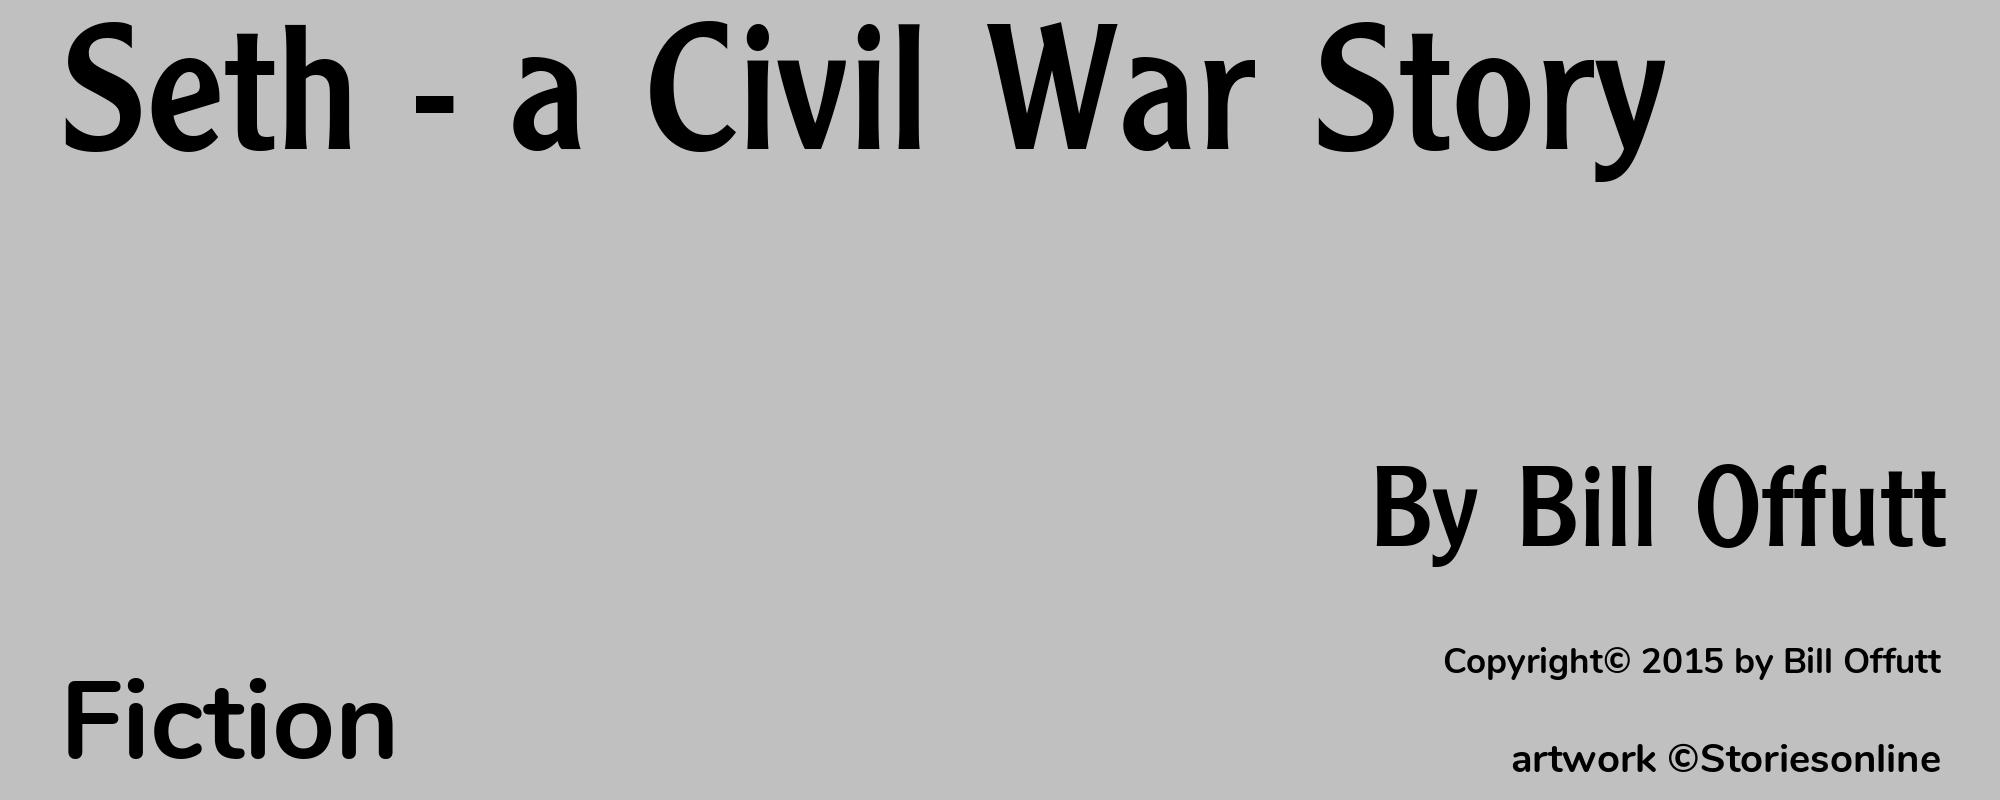 Seth - a Civil War Story - Cover